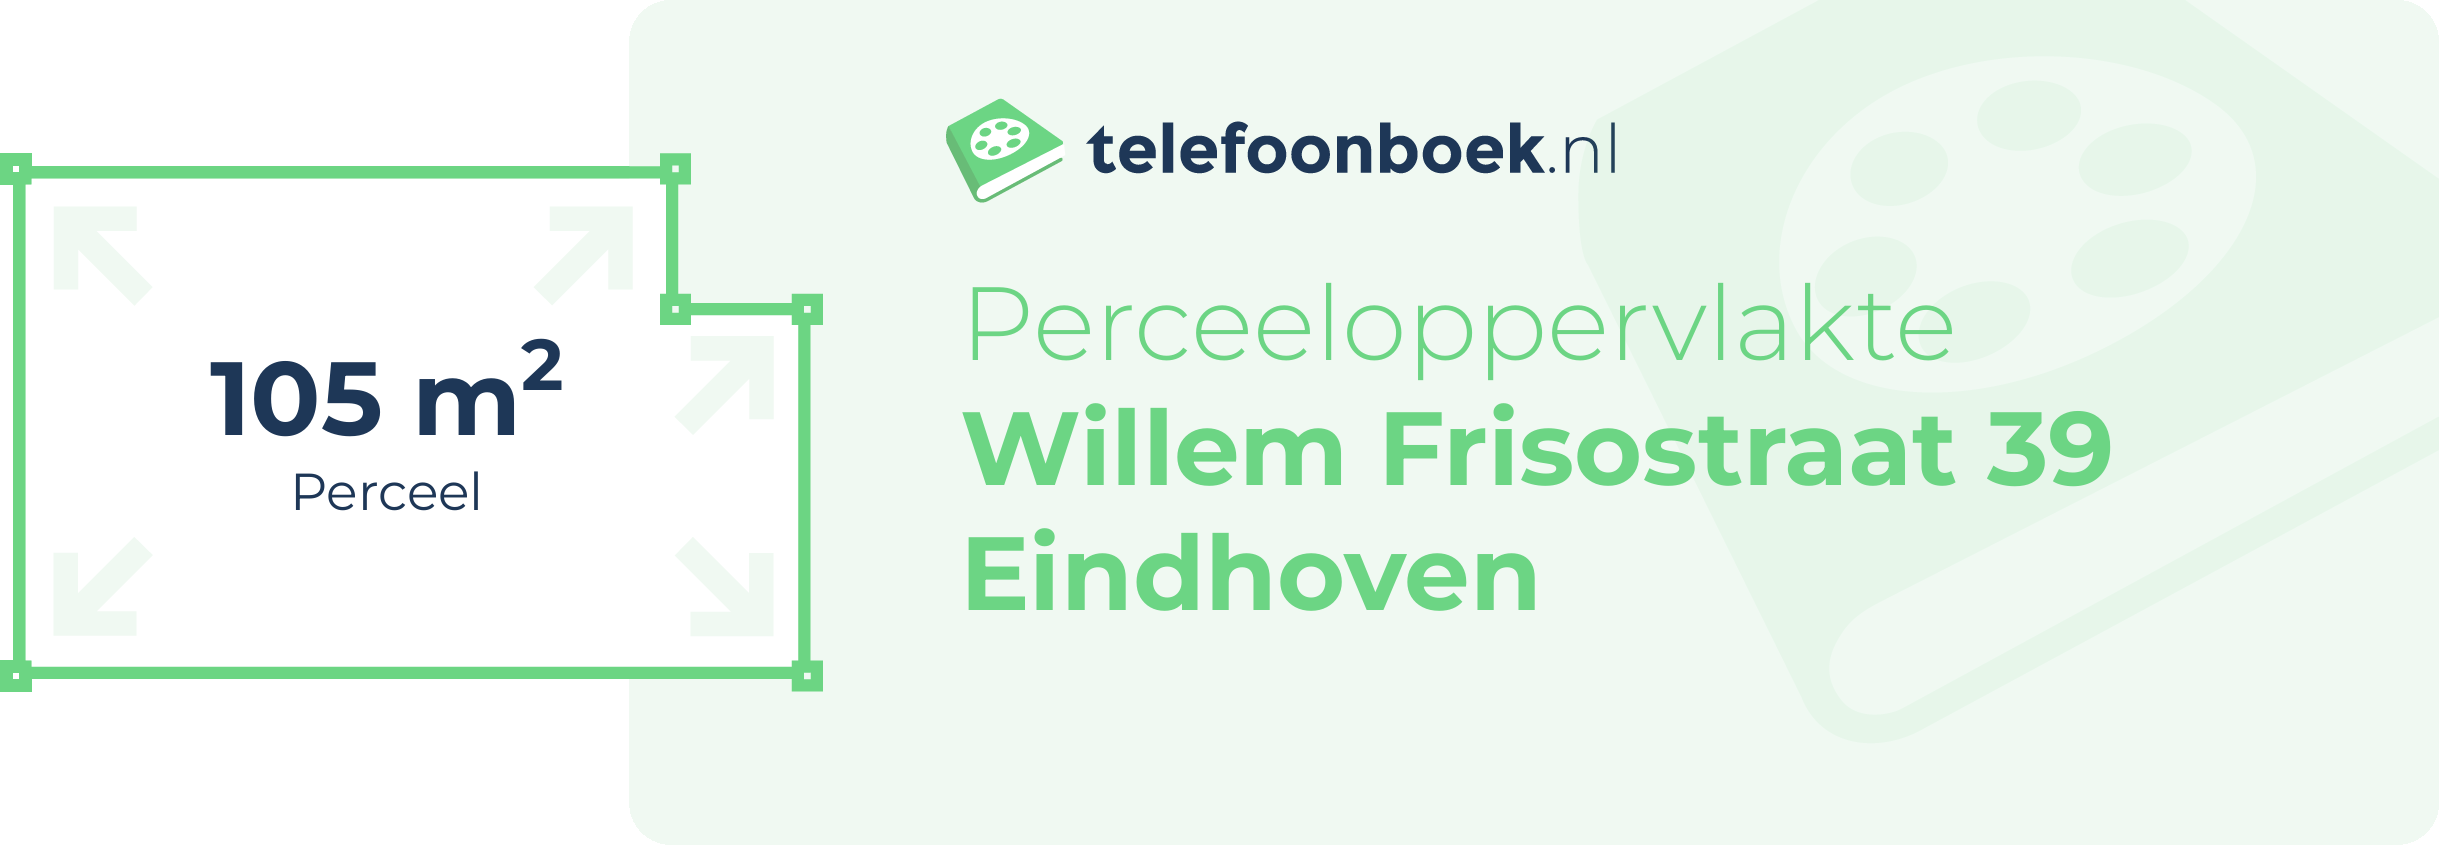 Perceeloppervlakte Willem Frisostraat 39 Eindhoven